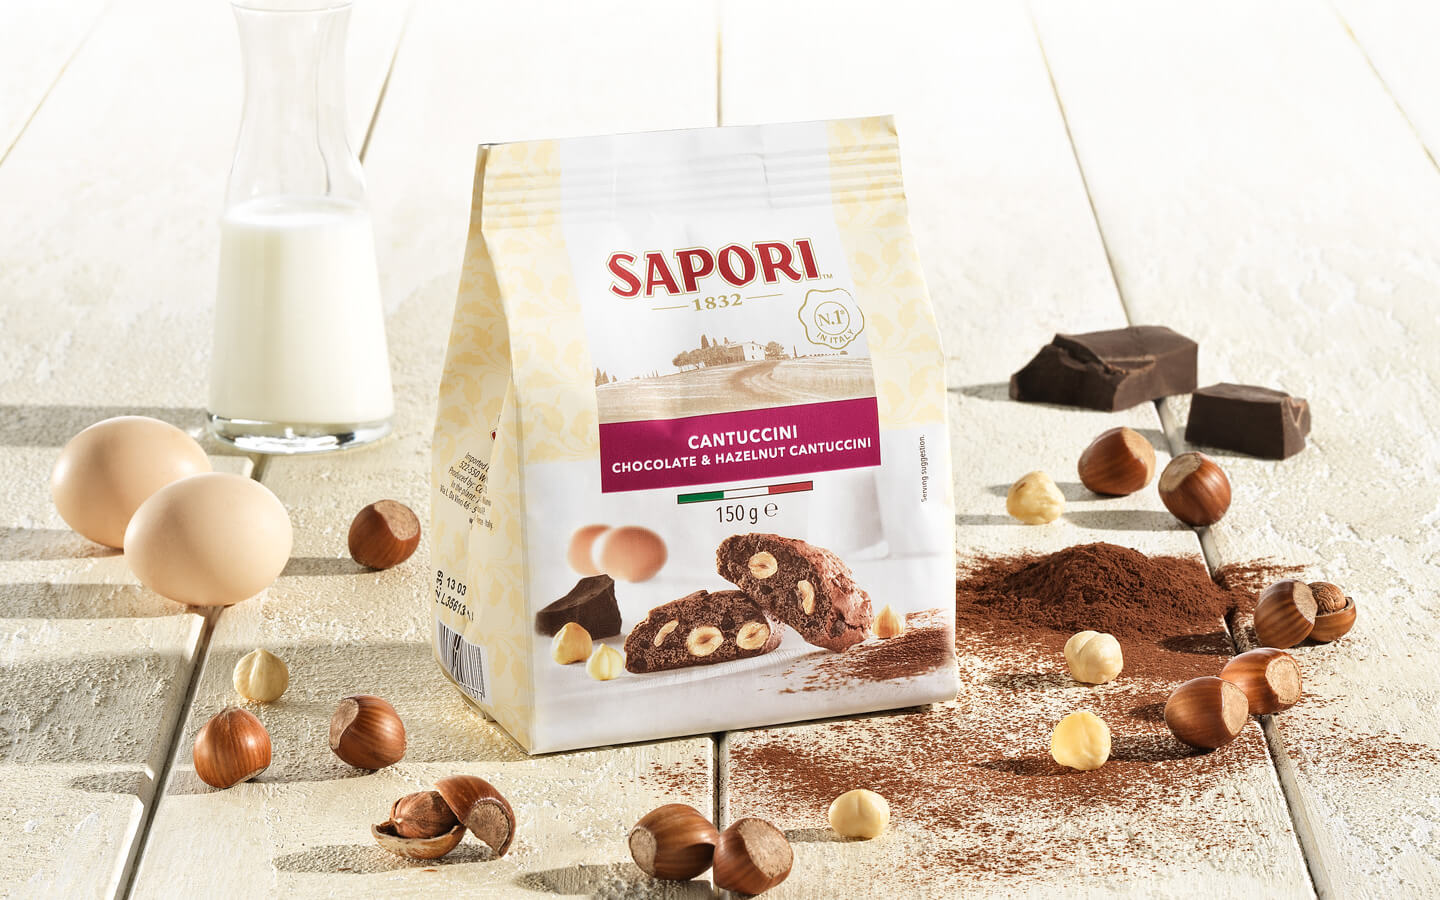 Cantuccini chocolate & hazelnuts - Fosforica